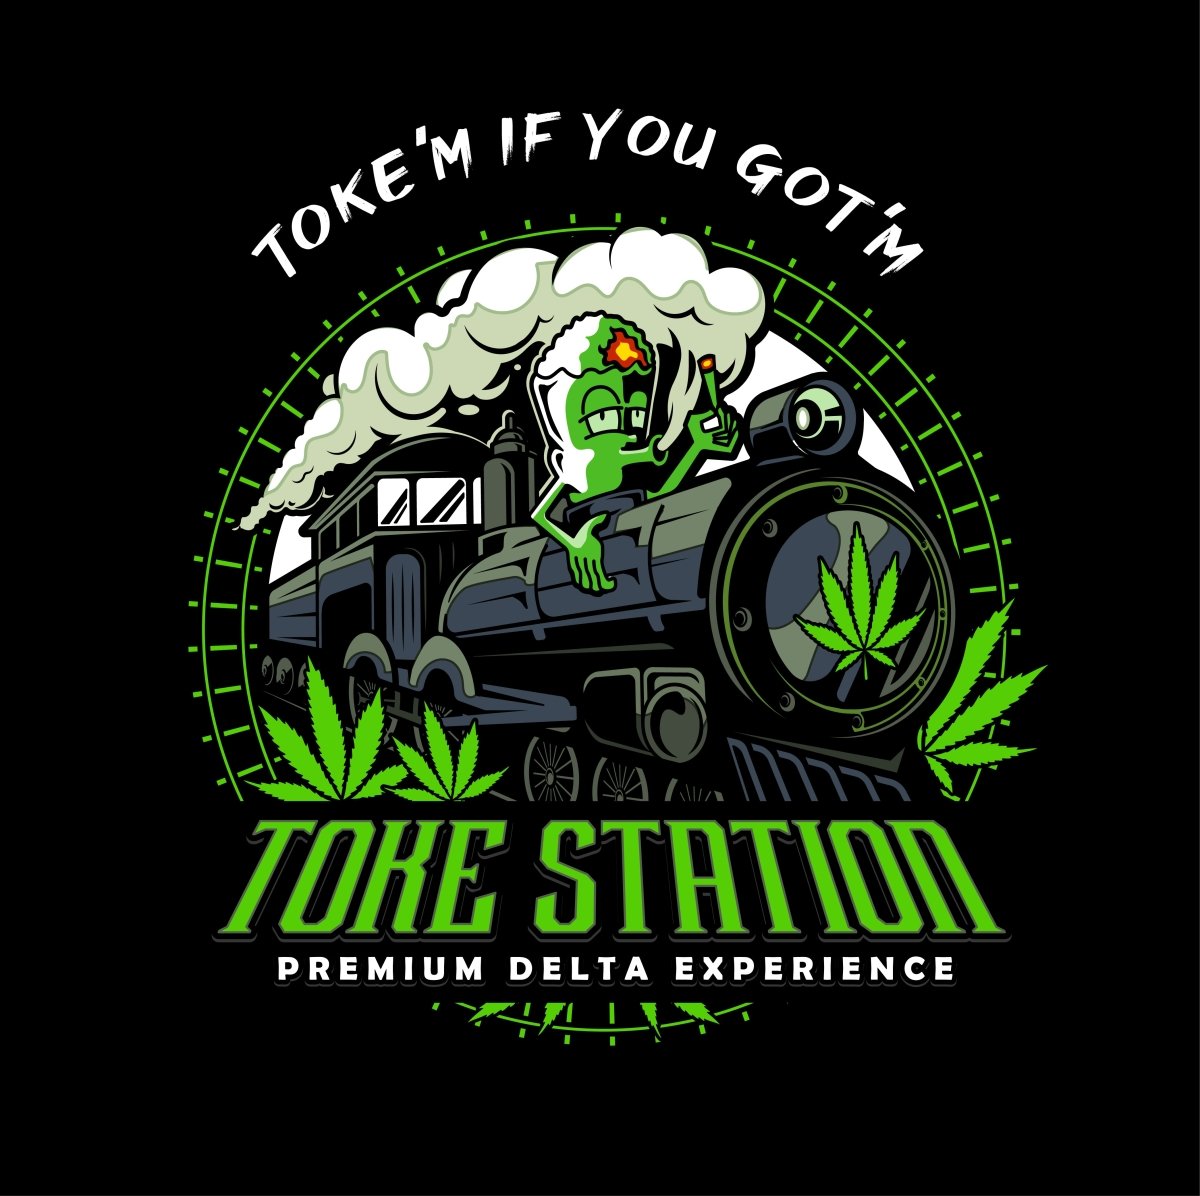 Toke Station